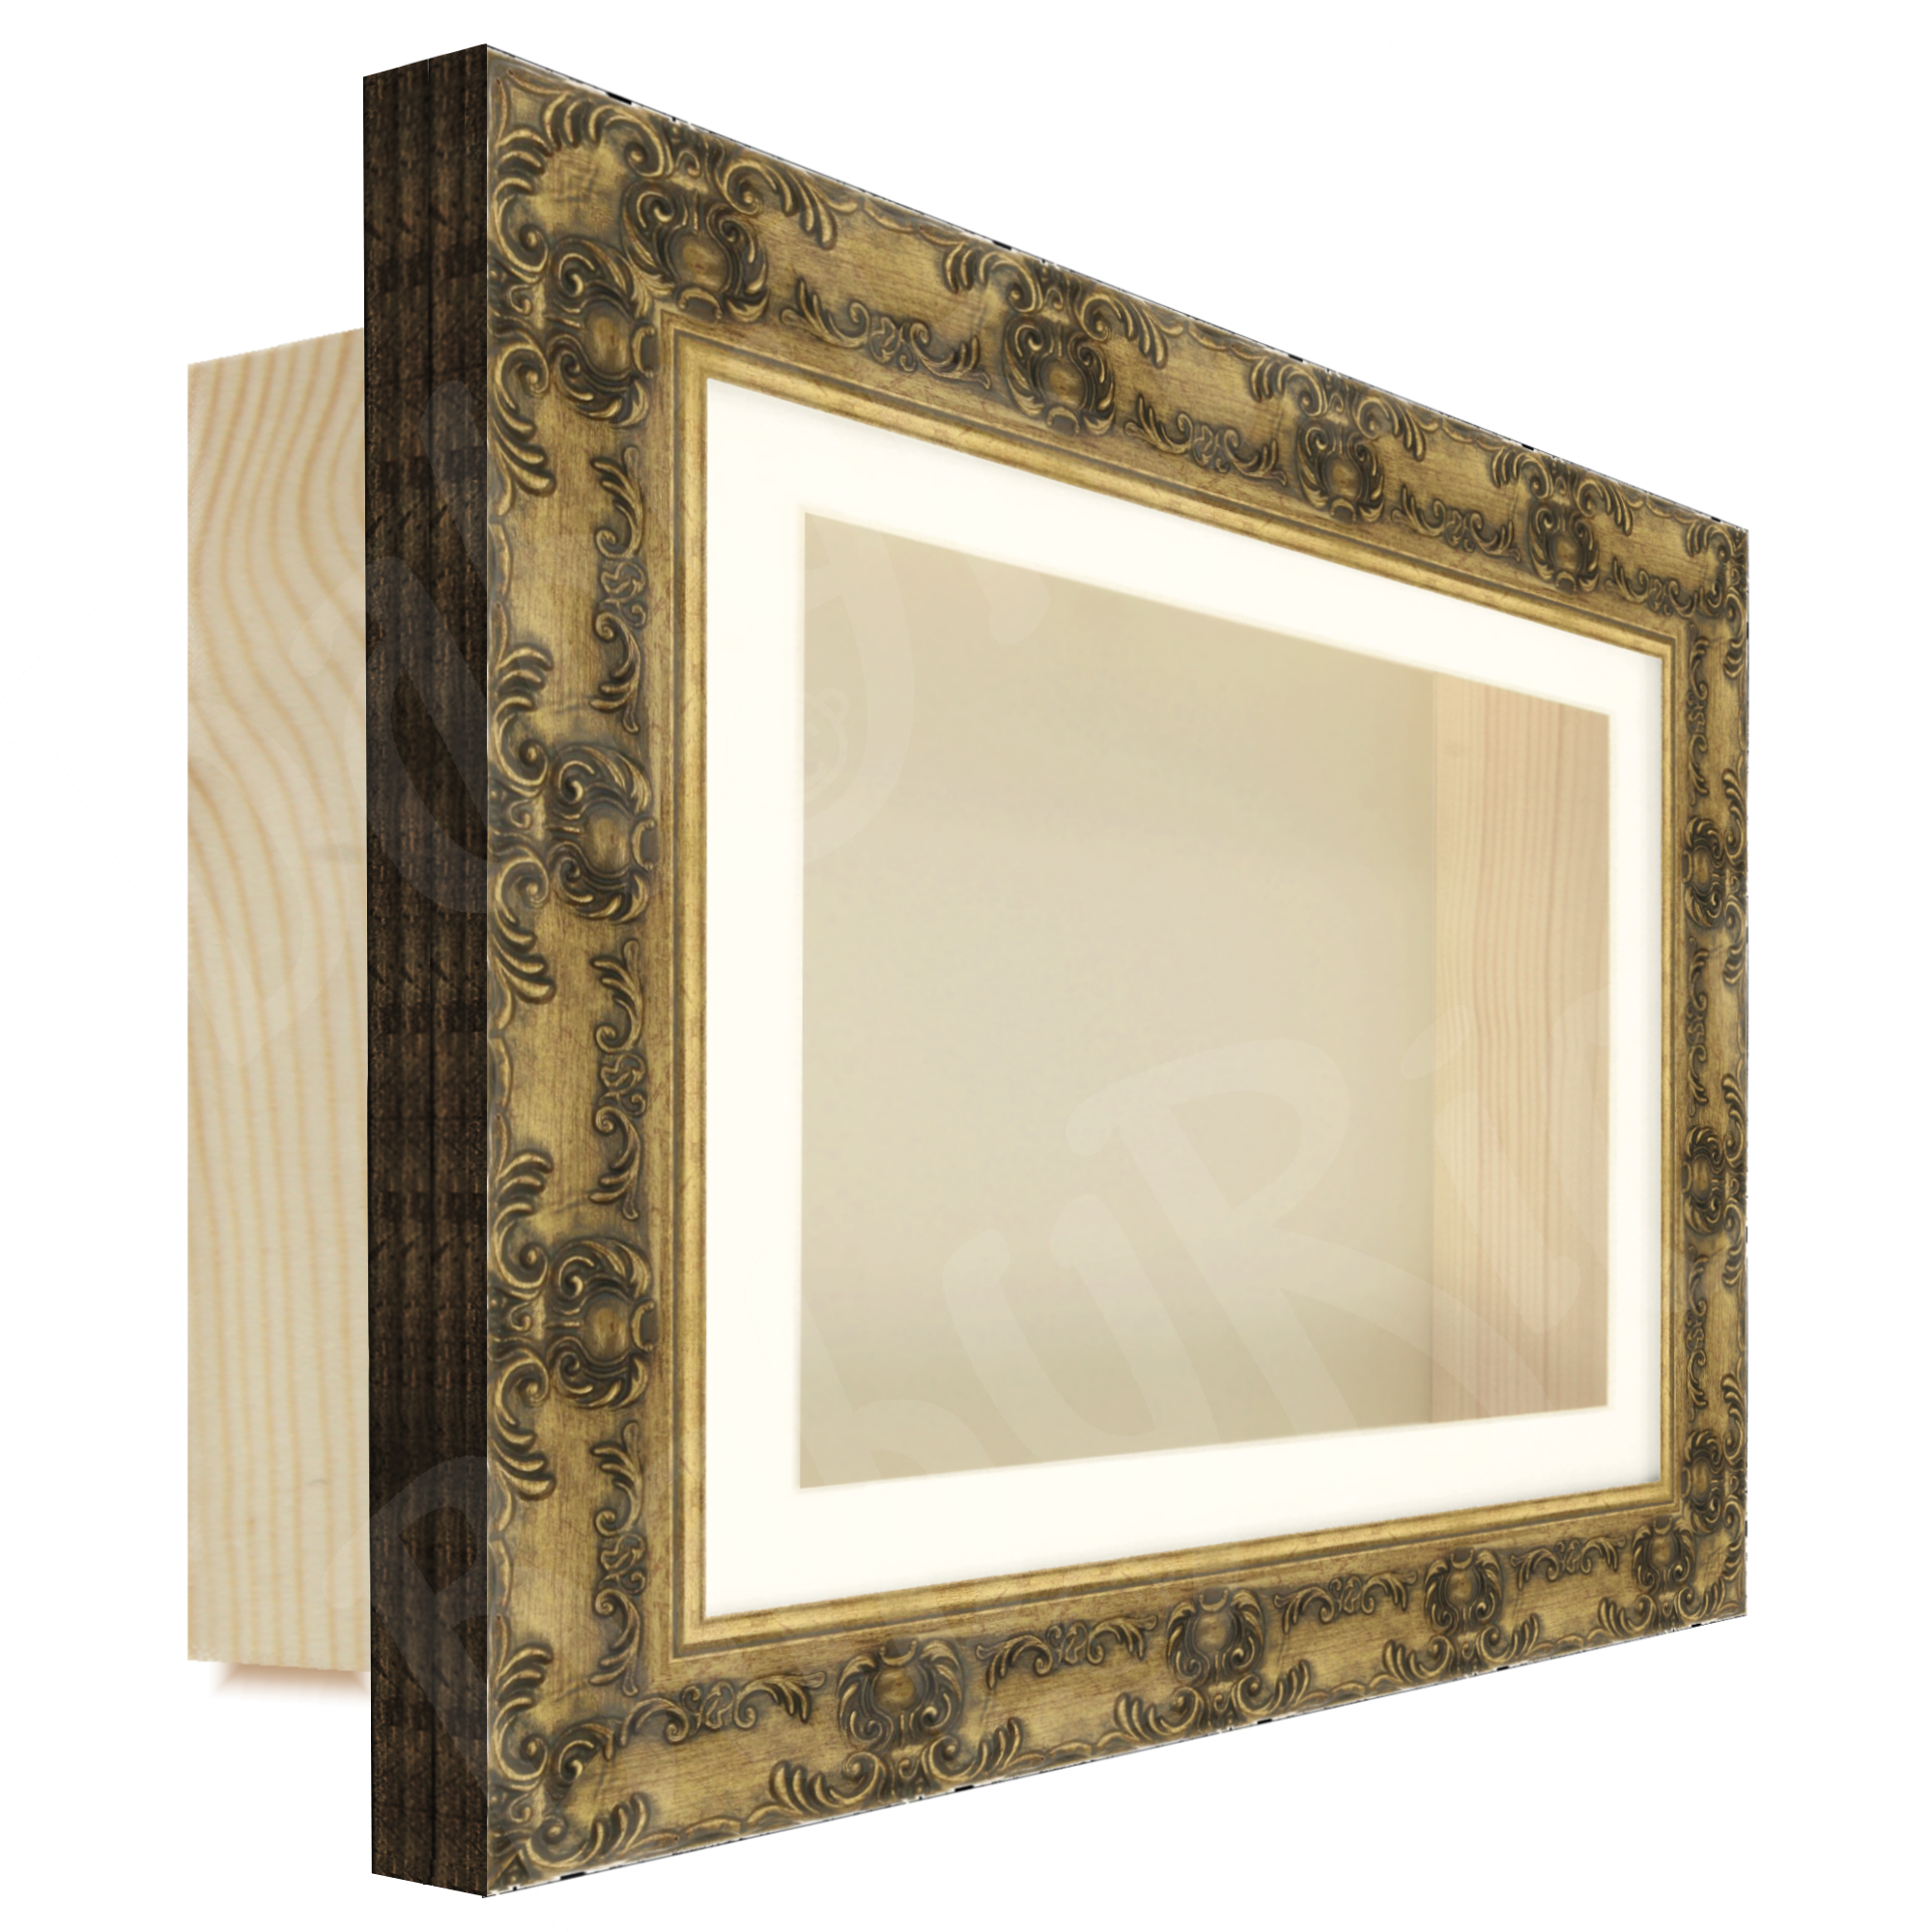 Antique Gold Neoclassical Rococo Ornate Frame